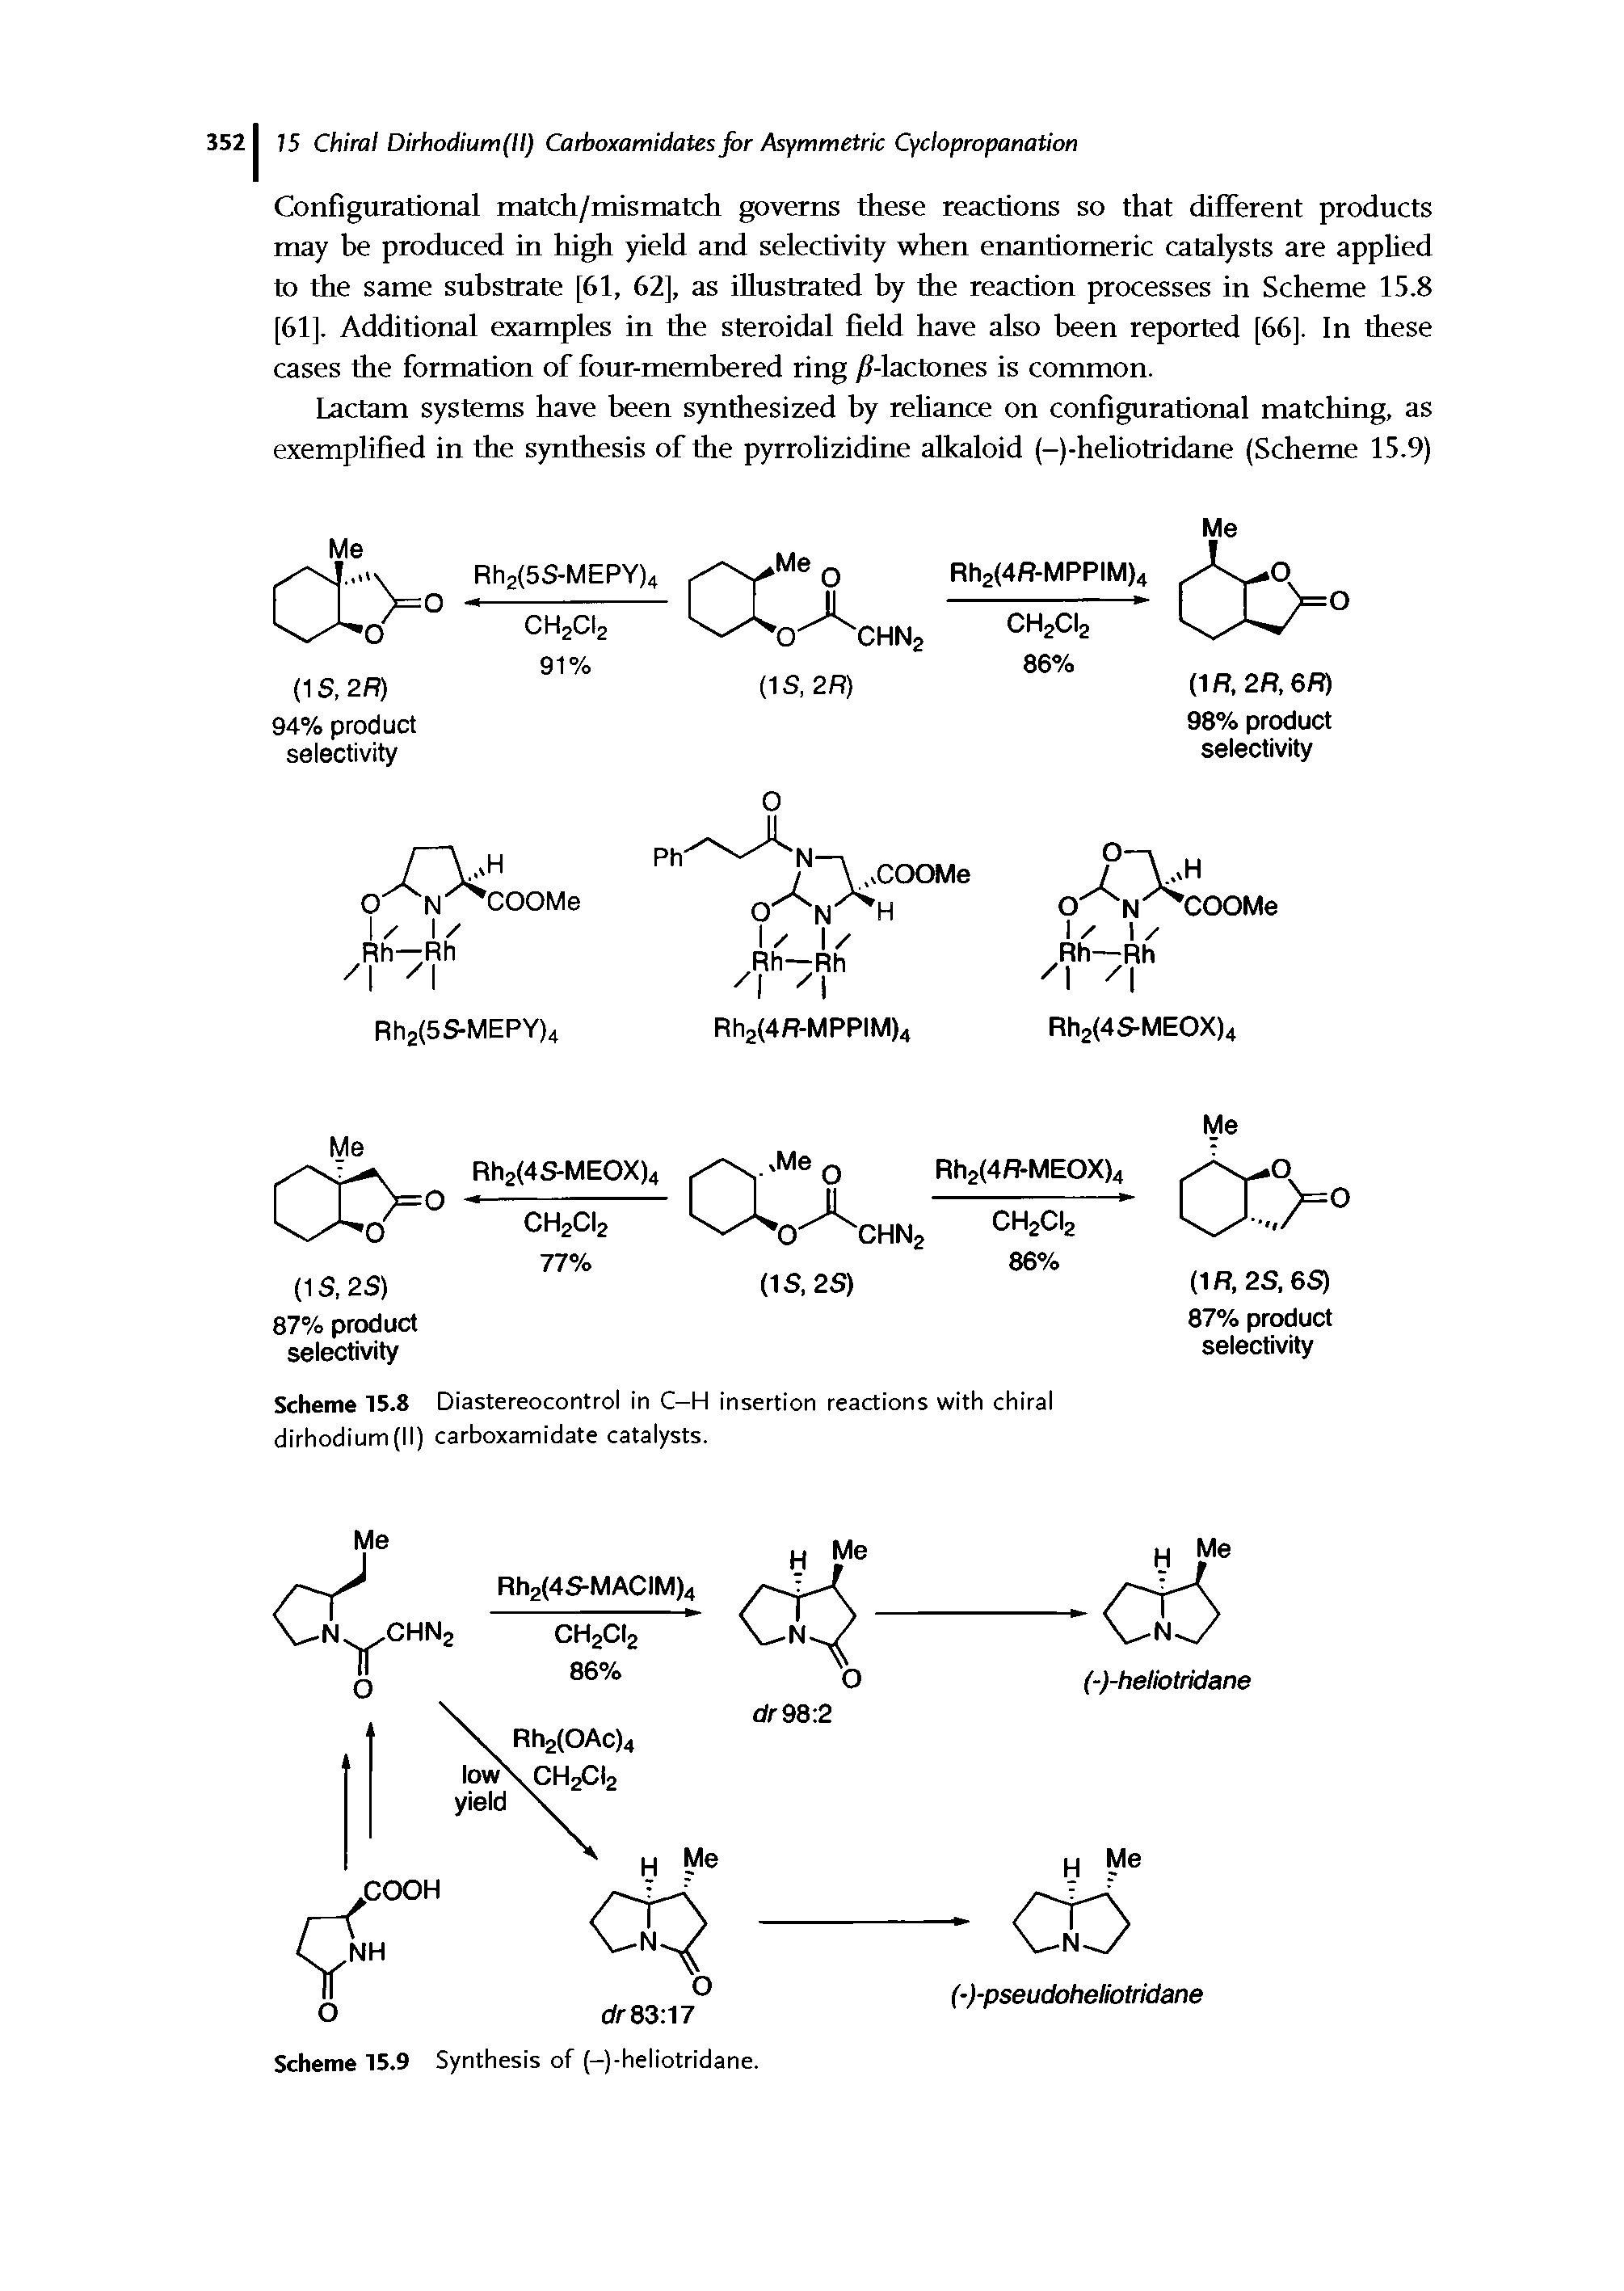 Scheme 15.8 Diastereocontrol in C-H insertion reactions with chiral dirhodium(II) carboxamidate catalysts.